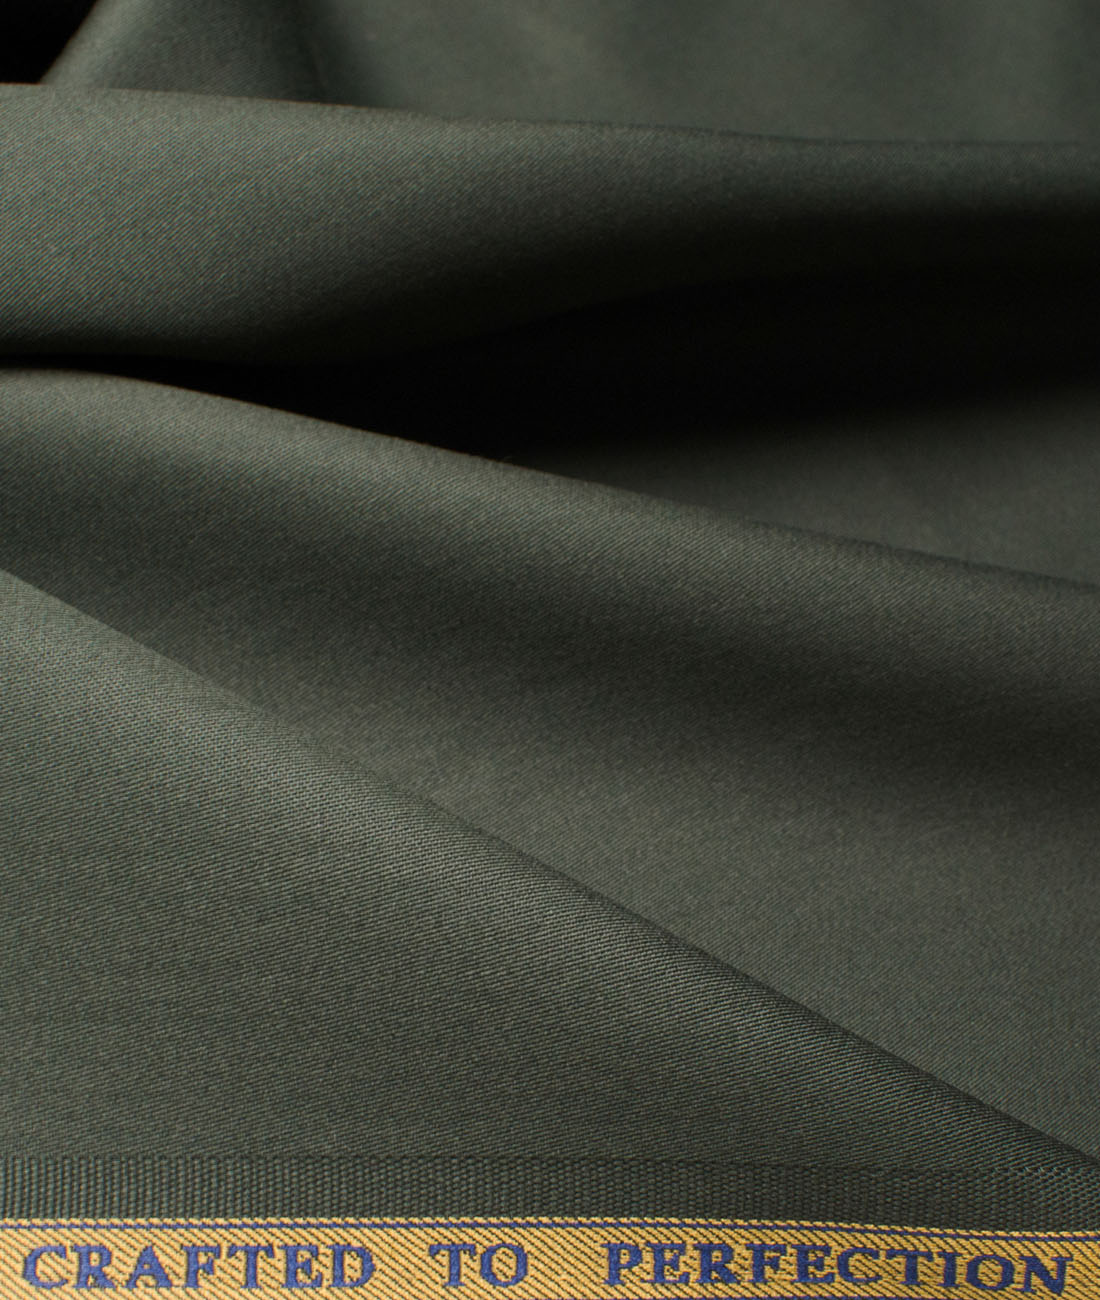 Soktas Men's Giza Cotton Solids  Unstitched Shirting Fabric (Dark Seaweed Green)